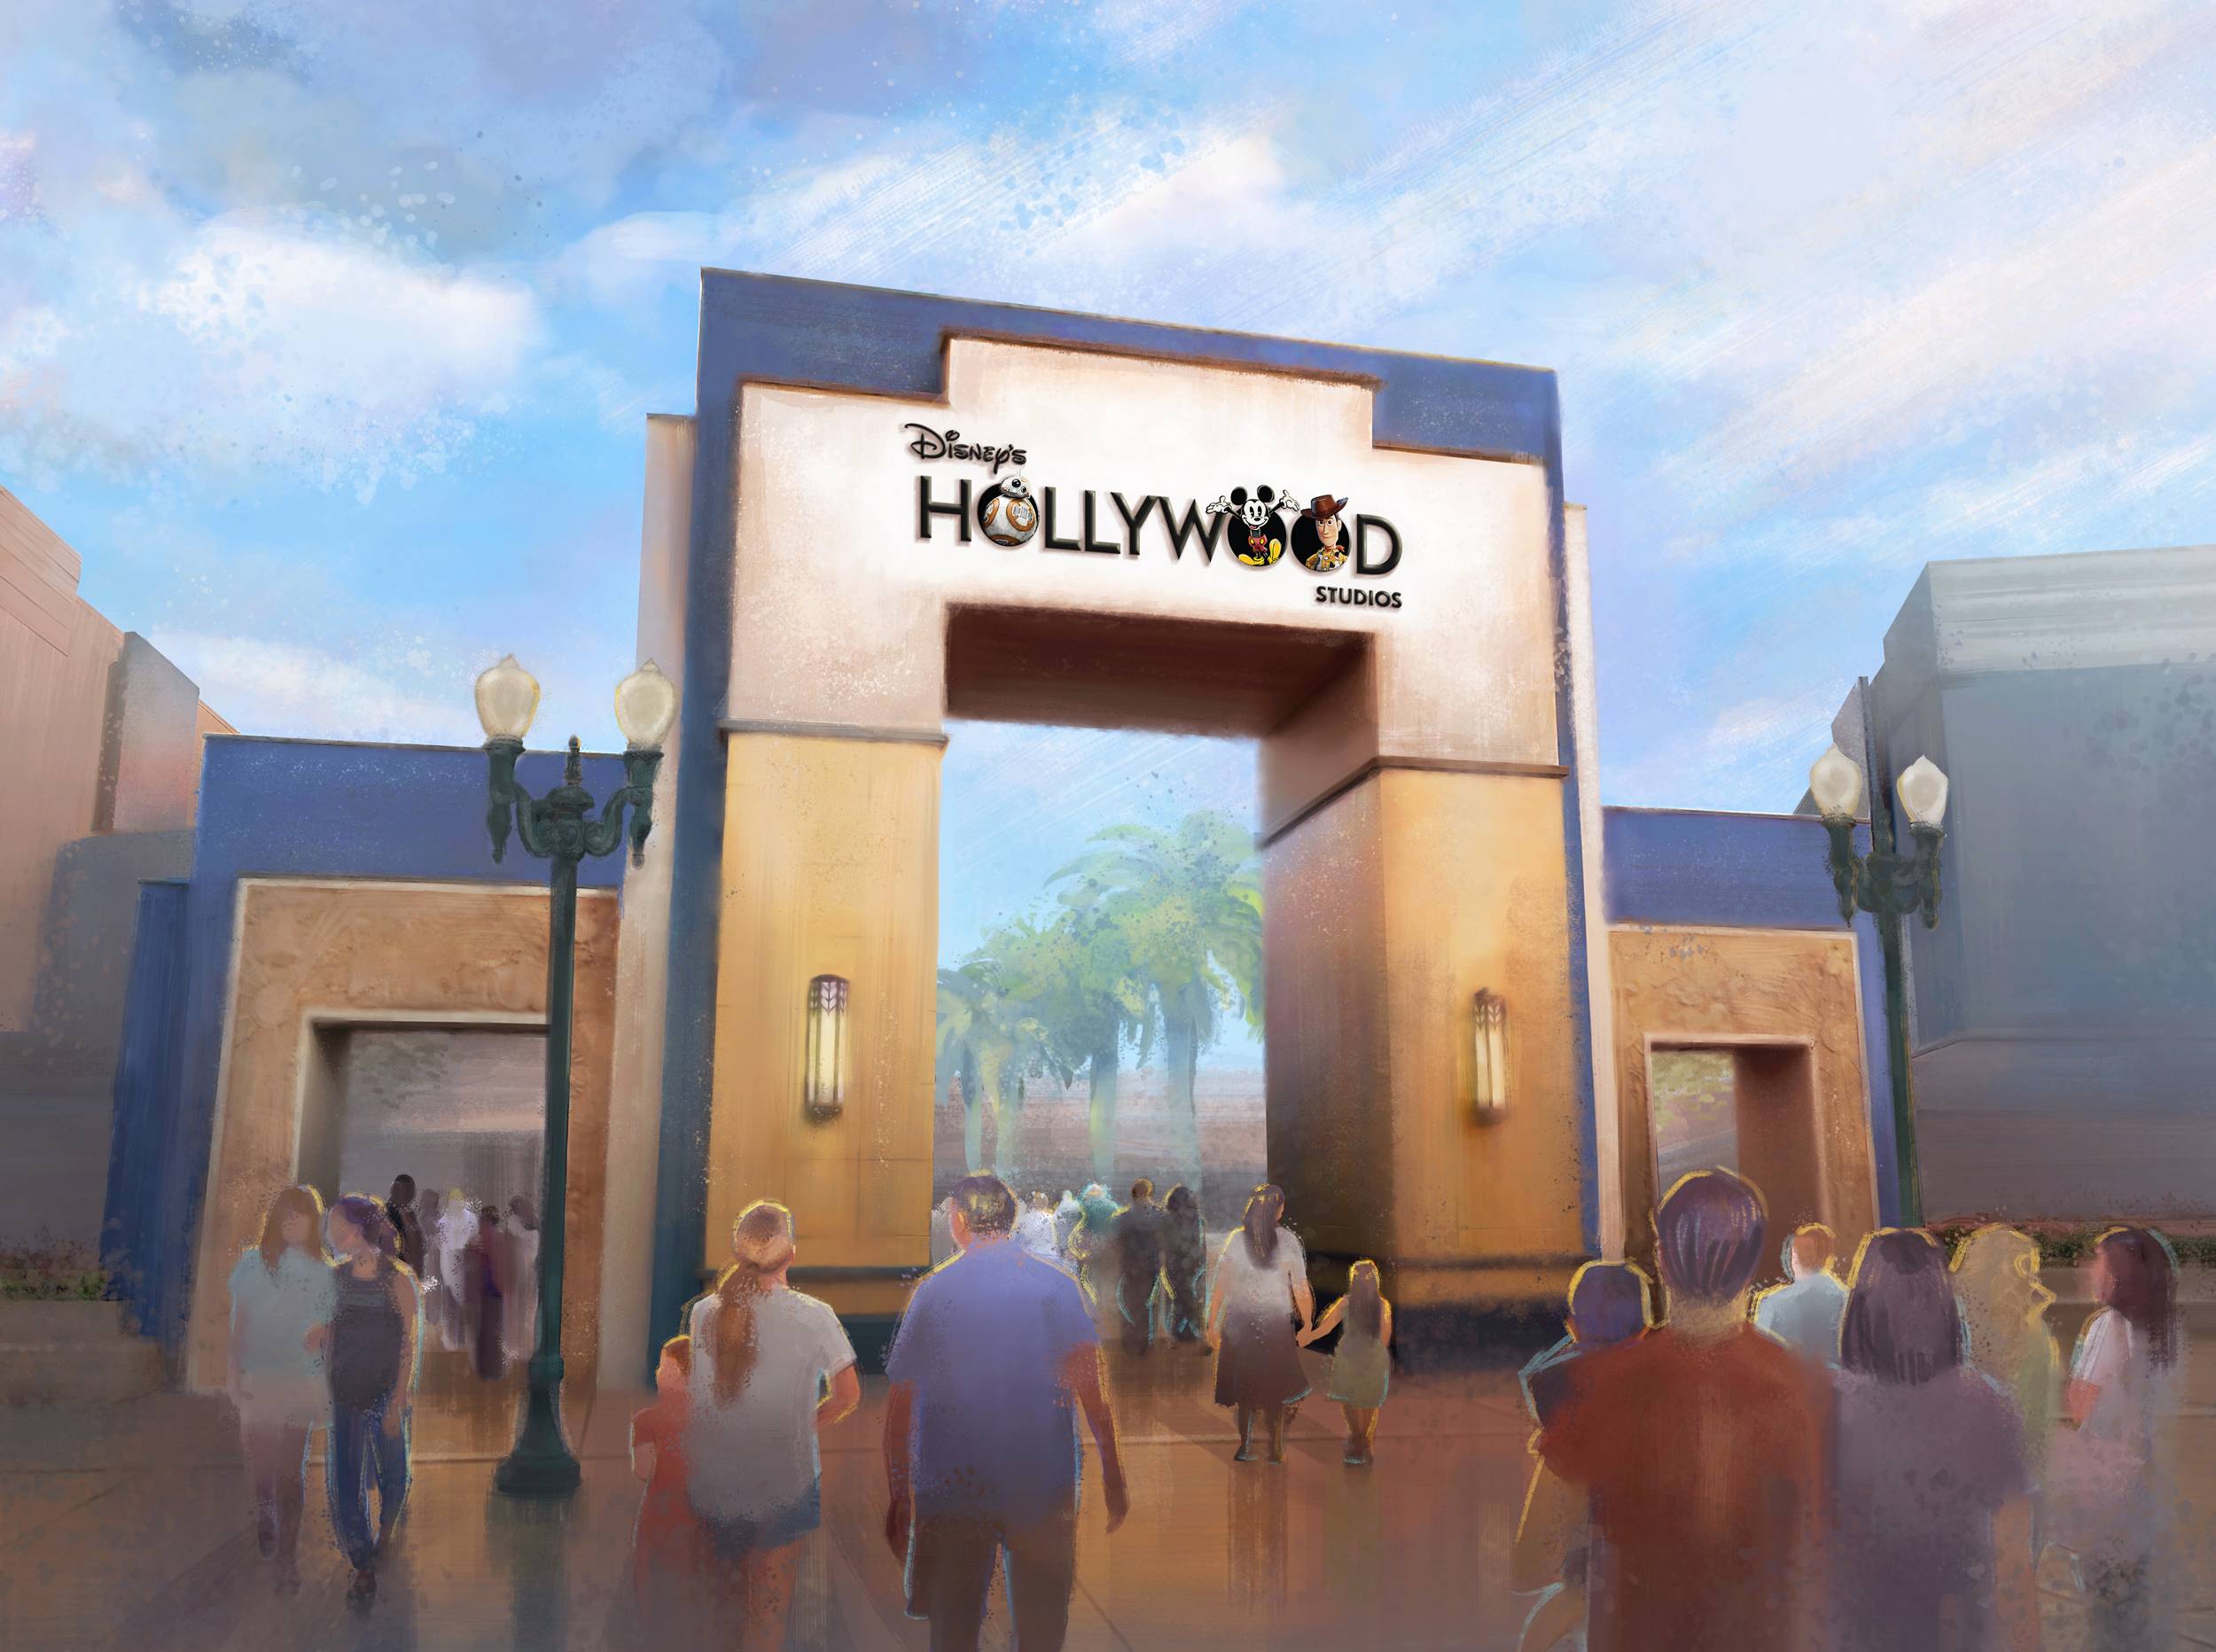 PHOTOS - New logo unveiled for Disney's Hollywood Studios